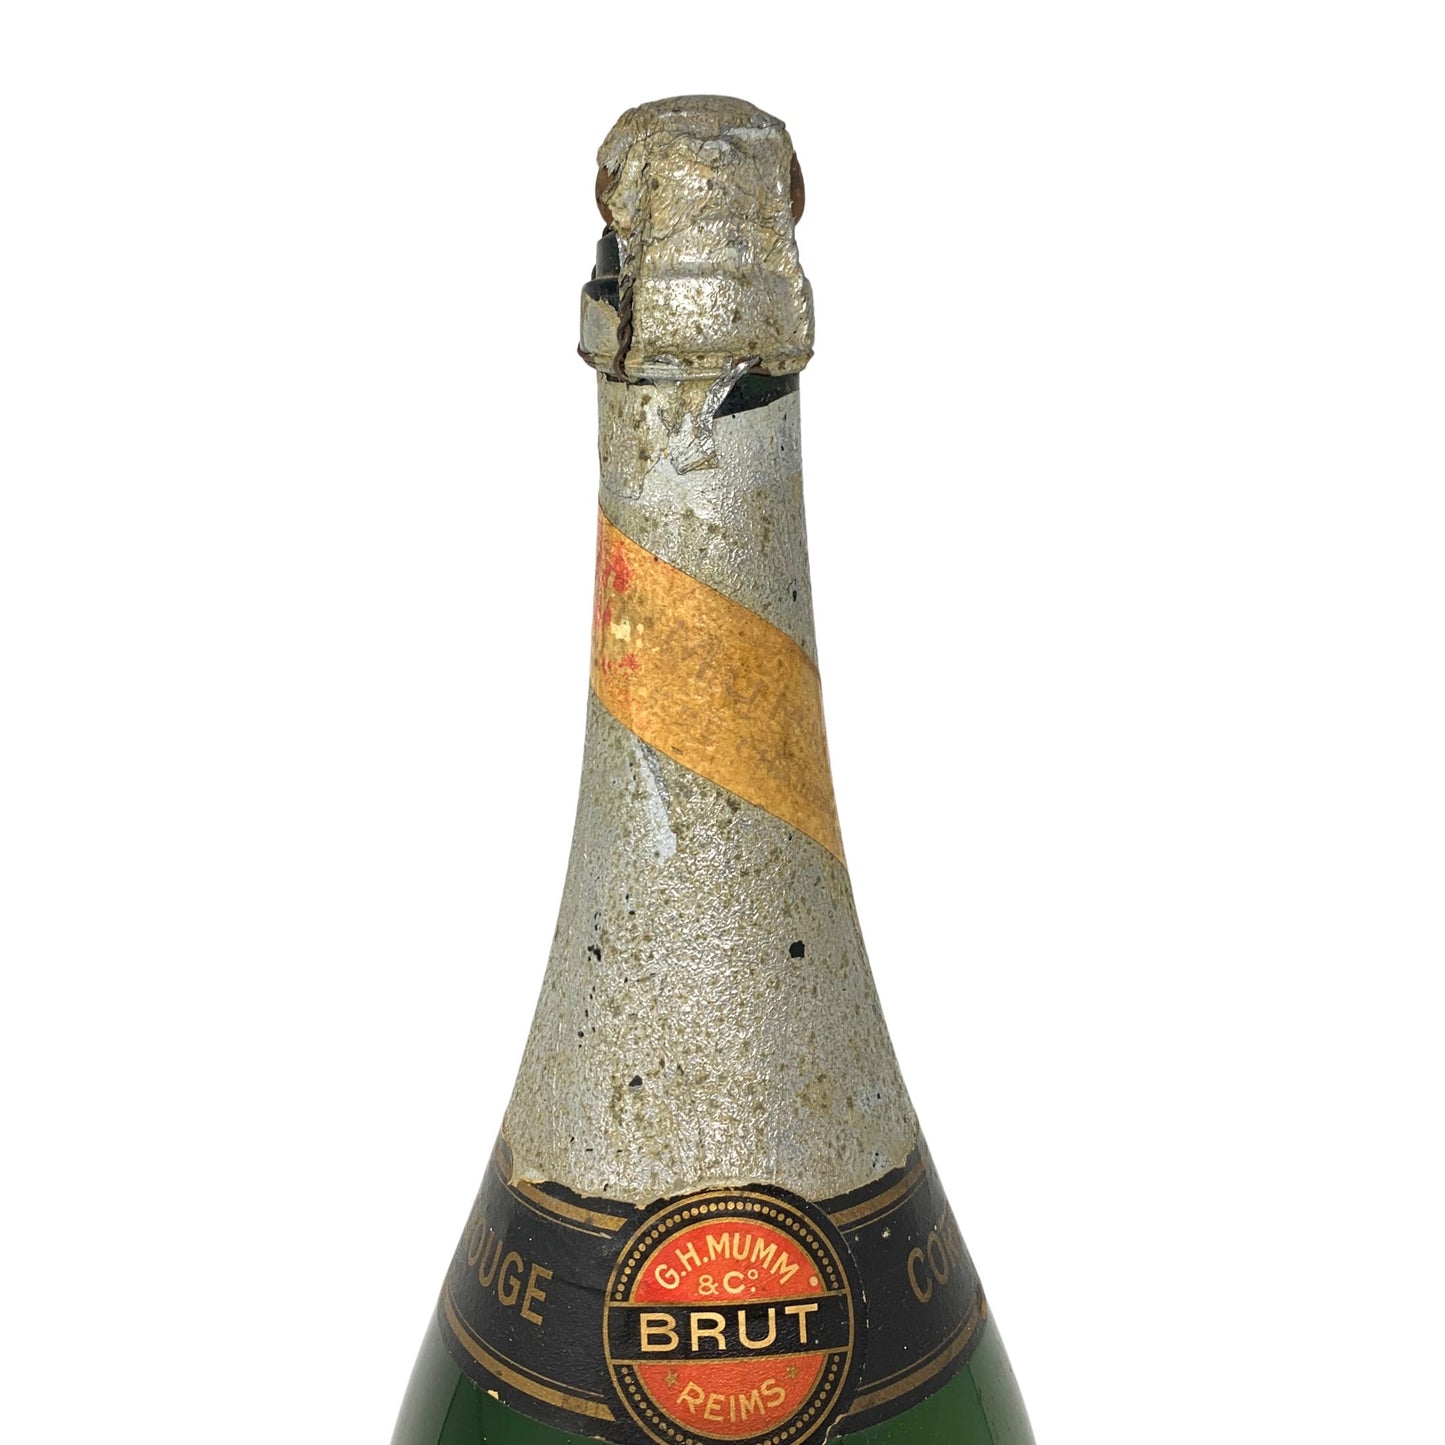 Vintage 22" Cordon Rouge G.H. Mumm & Co. Champagne Display Bottle